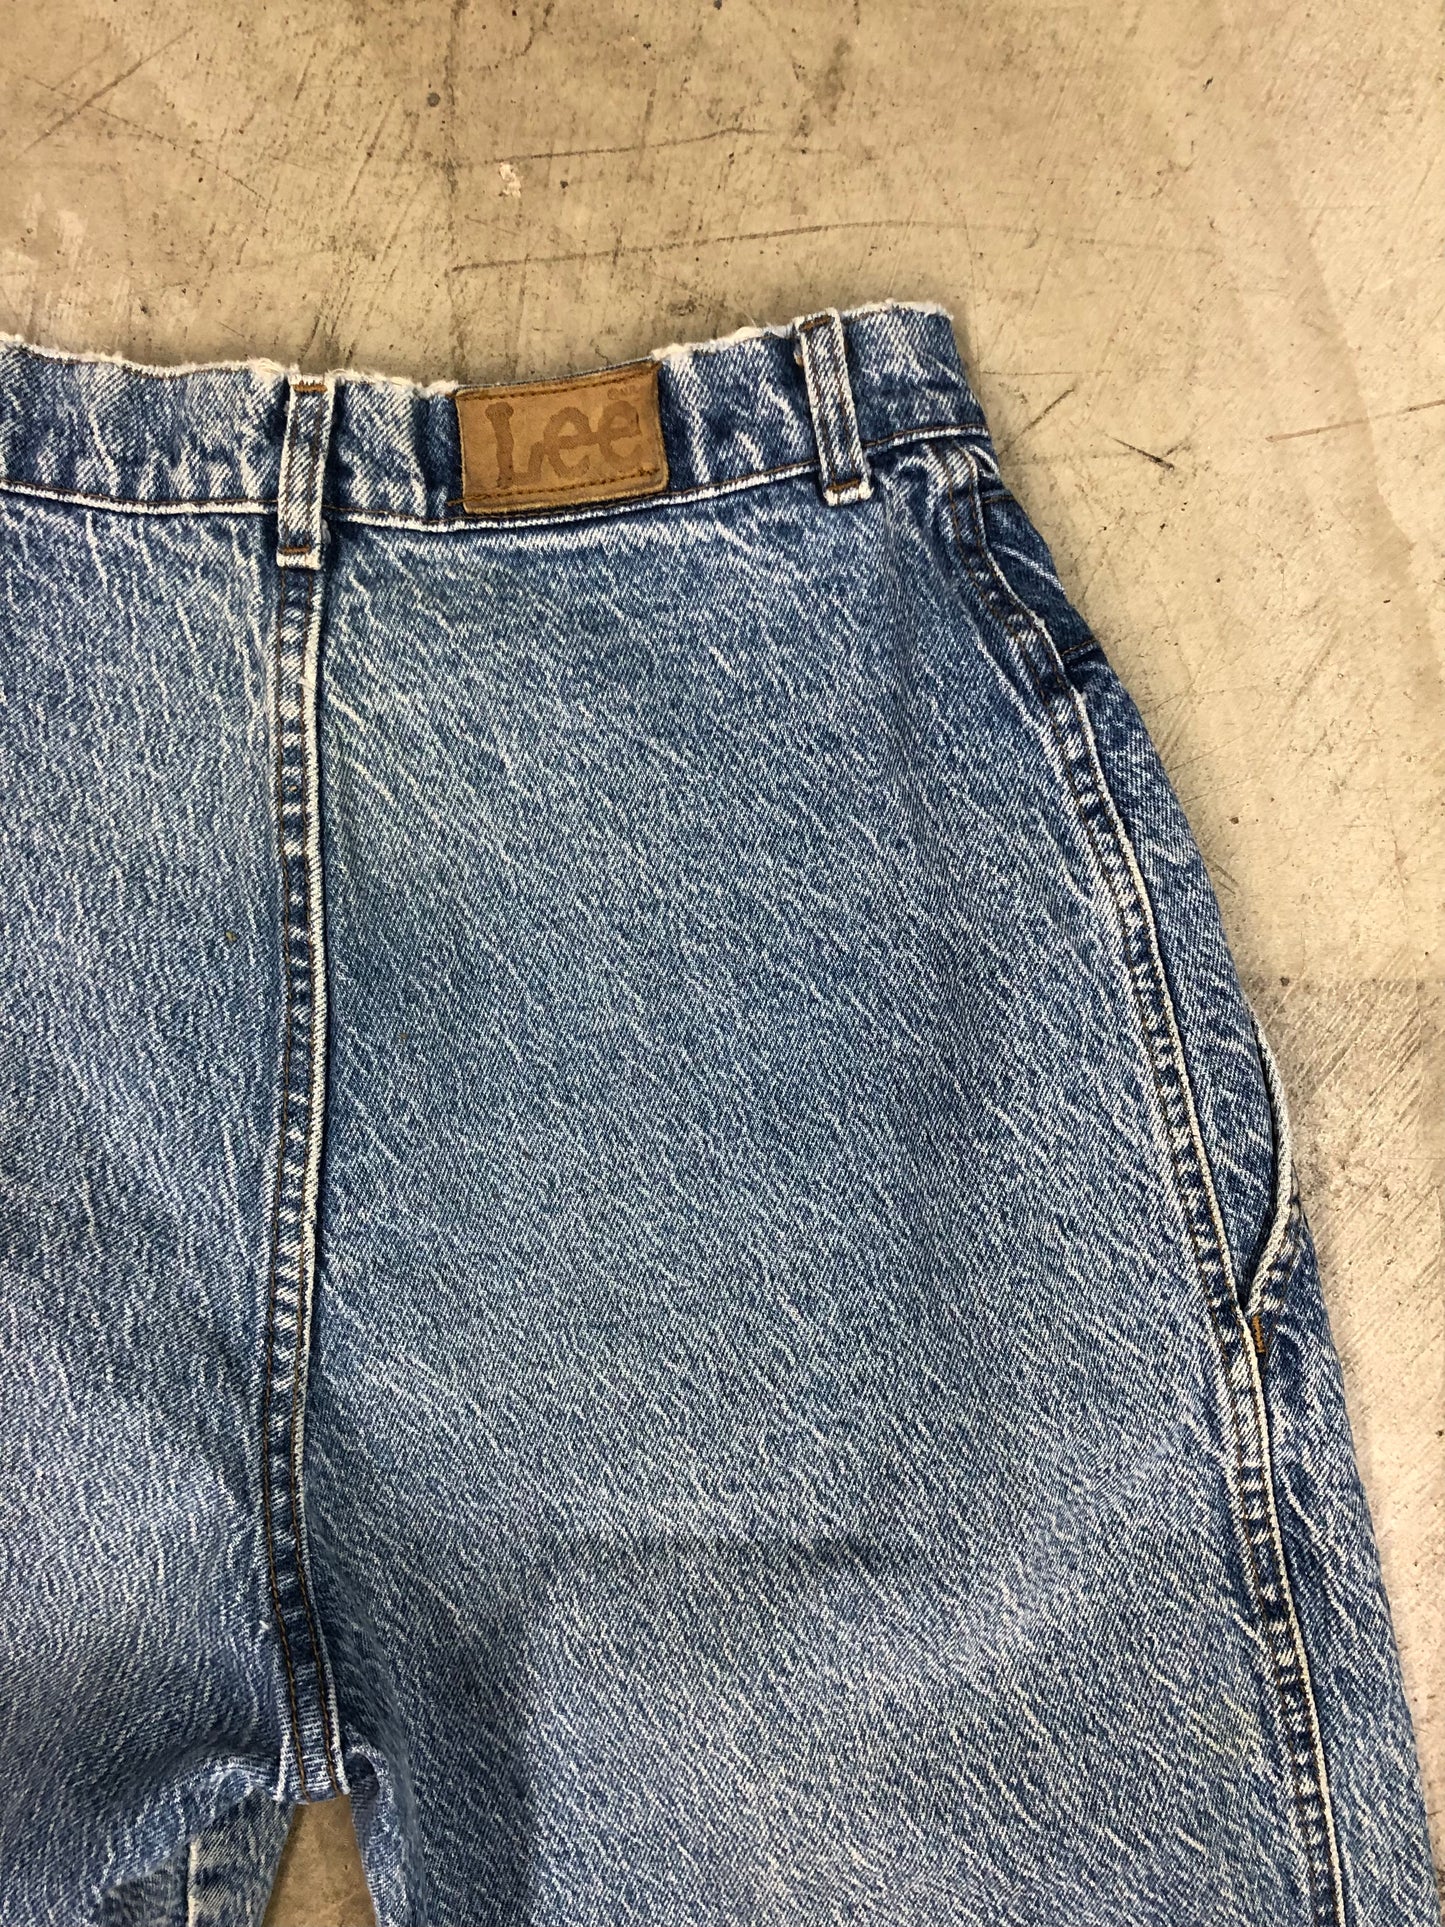 VTG Lee Stone Wash High waist Jeans Sz 28x31